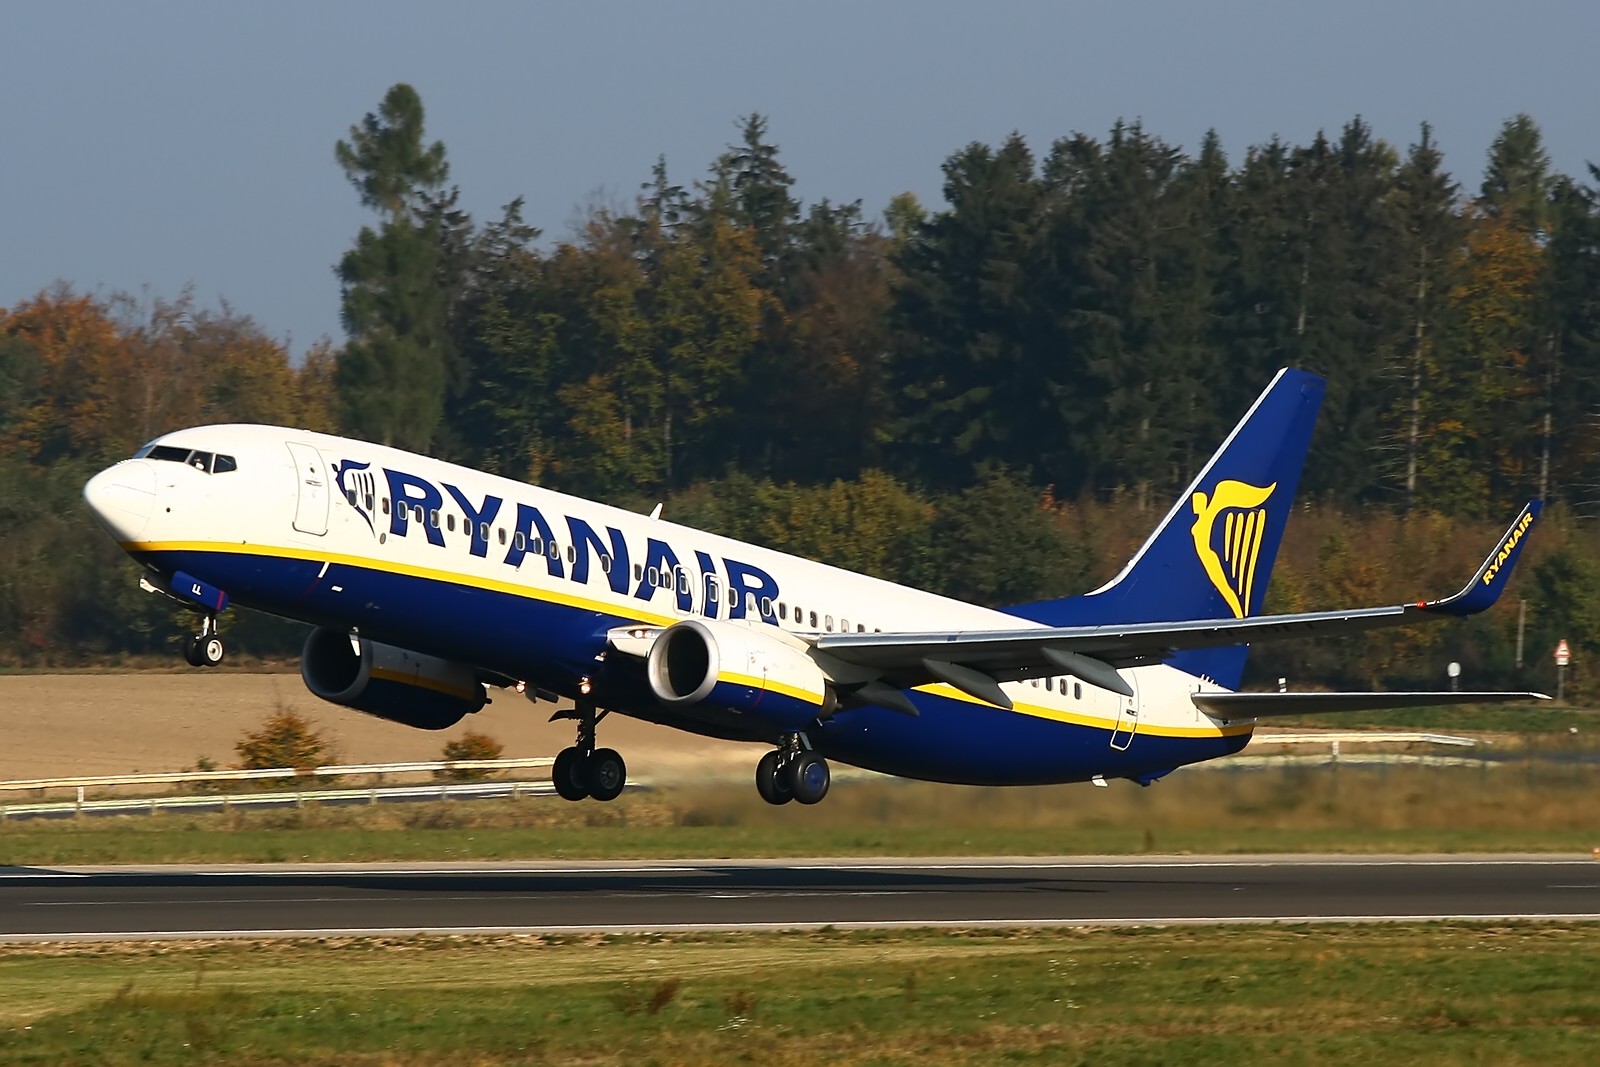 A Ryanair Anuncia Nova Rota De Inverno 2017 Lisboa – Bruxelas Charleroi